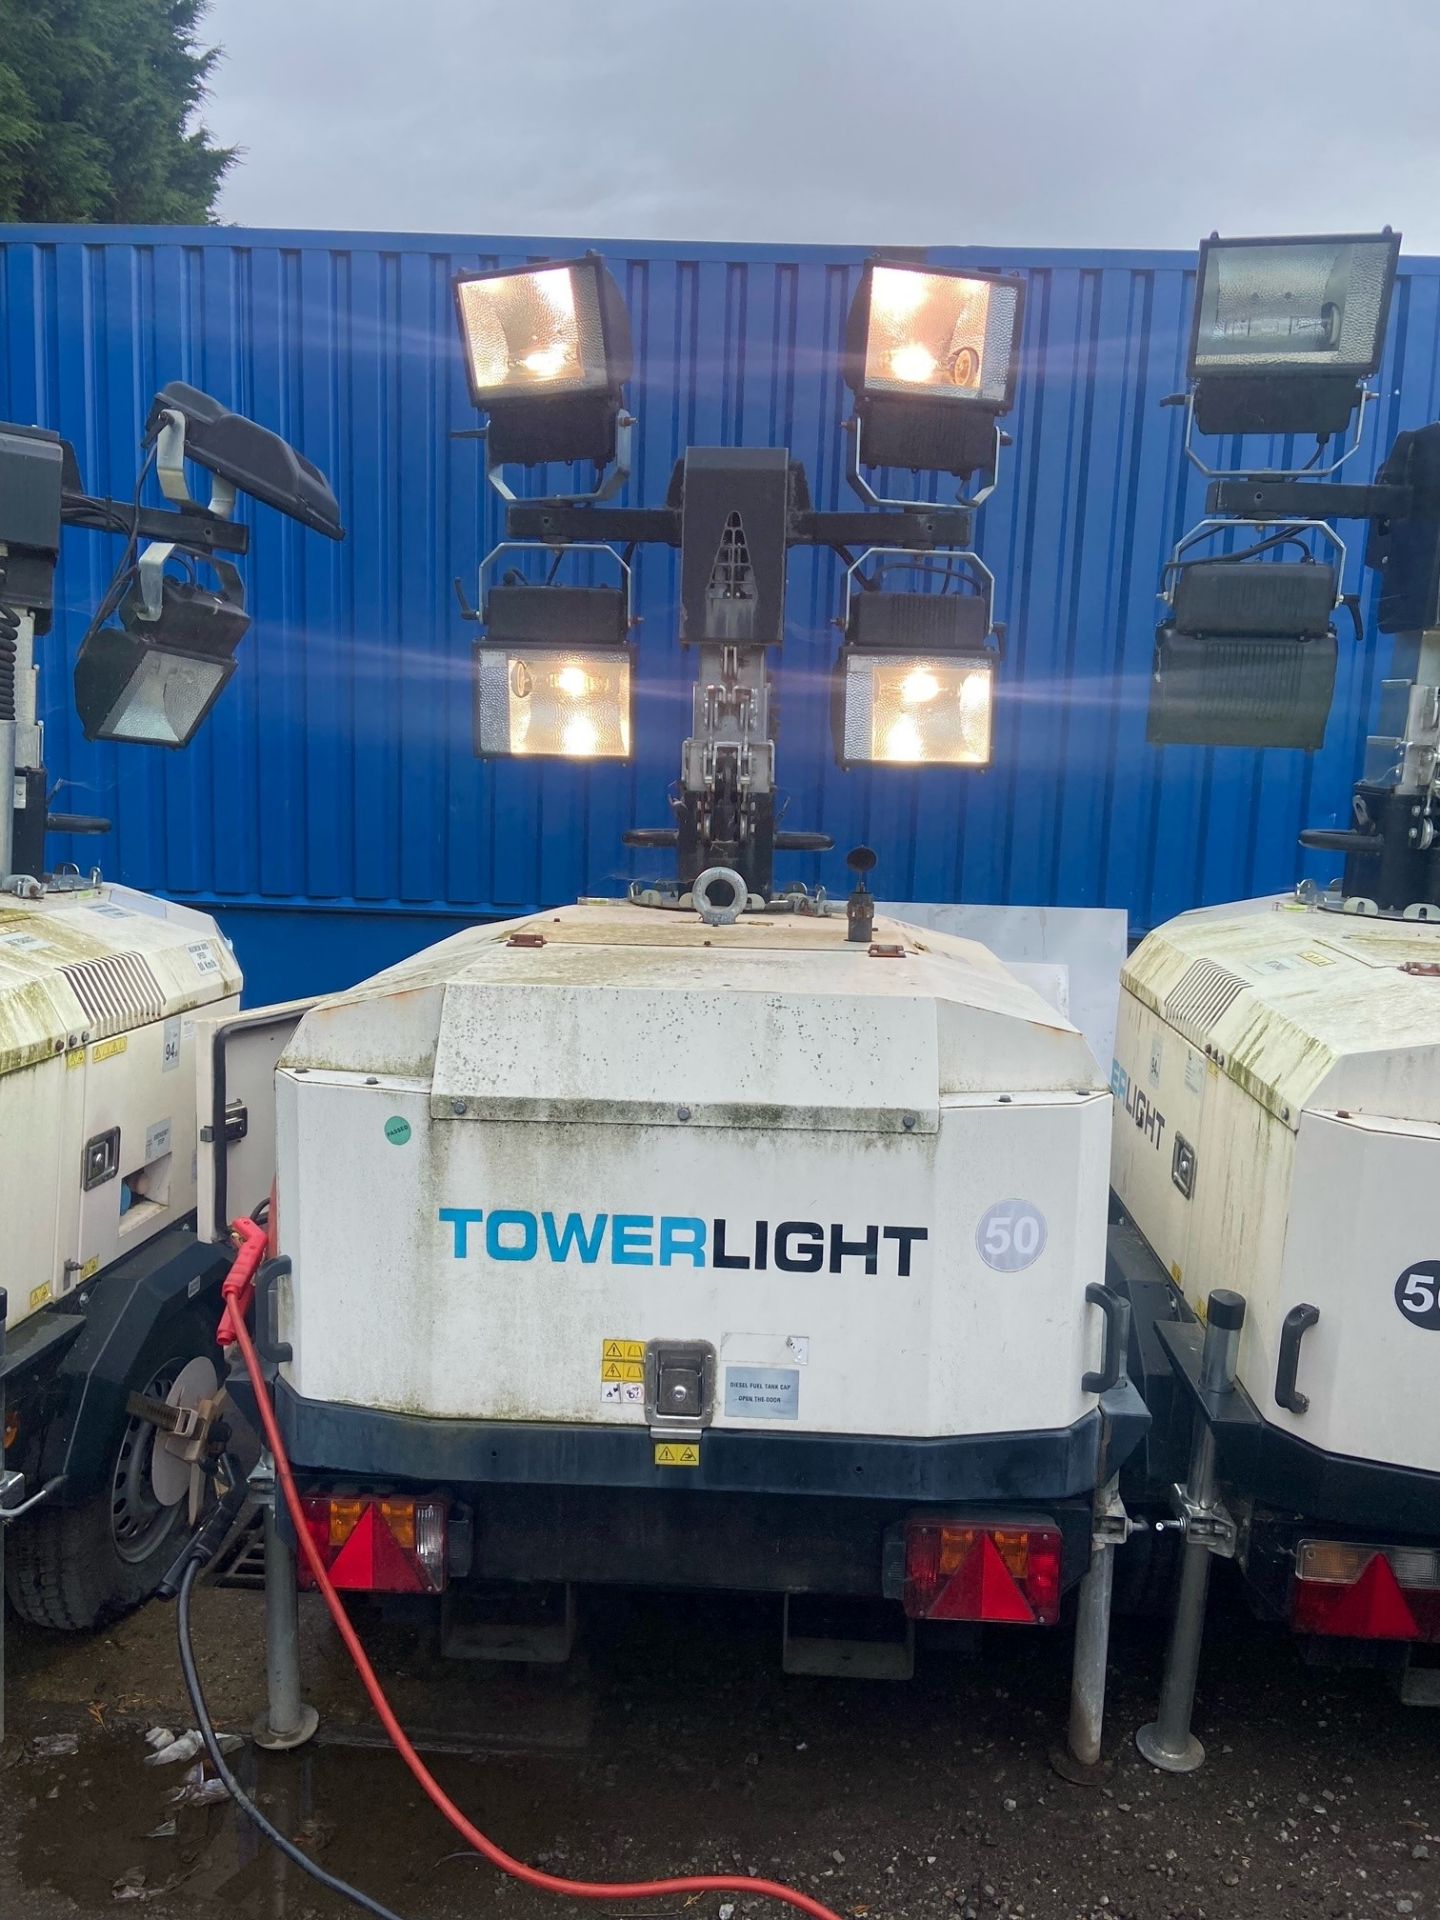 Towerlight VB9 4x400W metal halide lighting tower - Hatz 1B20-4 diesel engine - Linz E1C10S F gen - Image 8 of 18